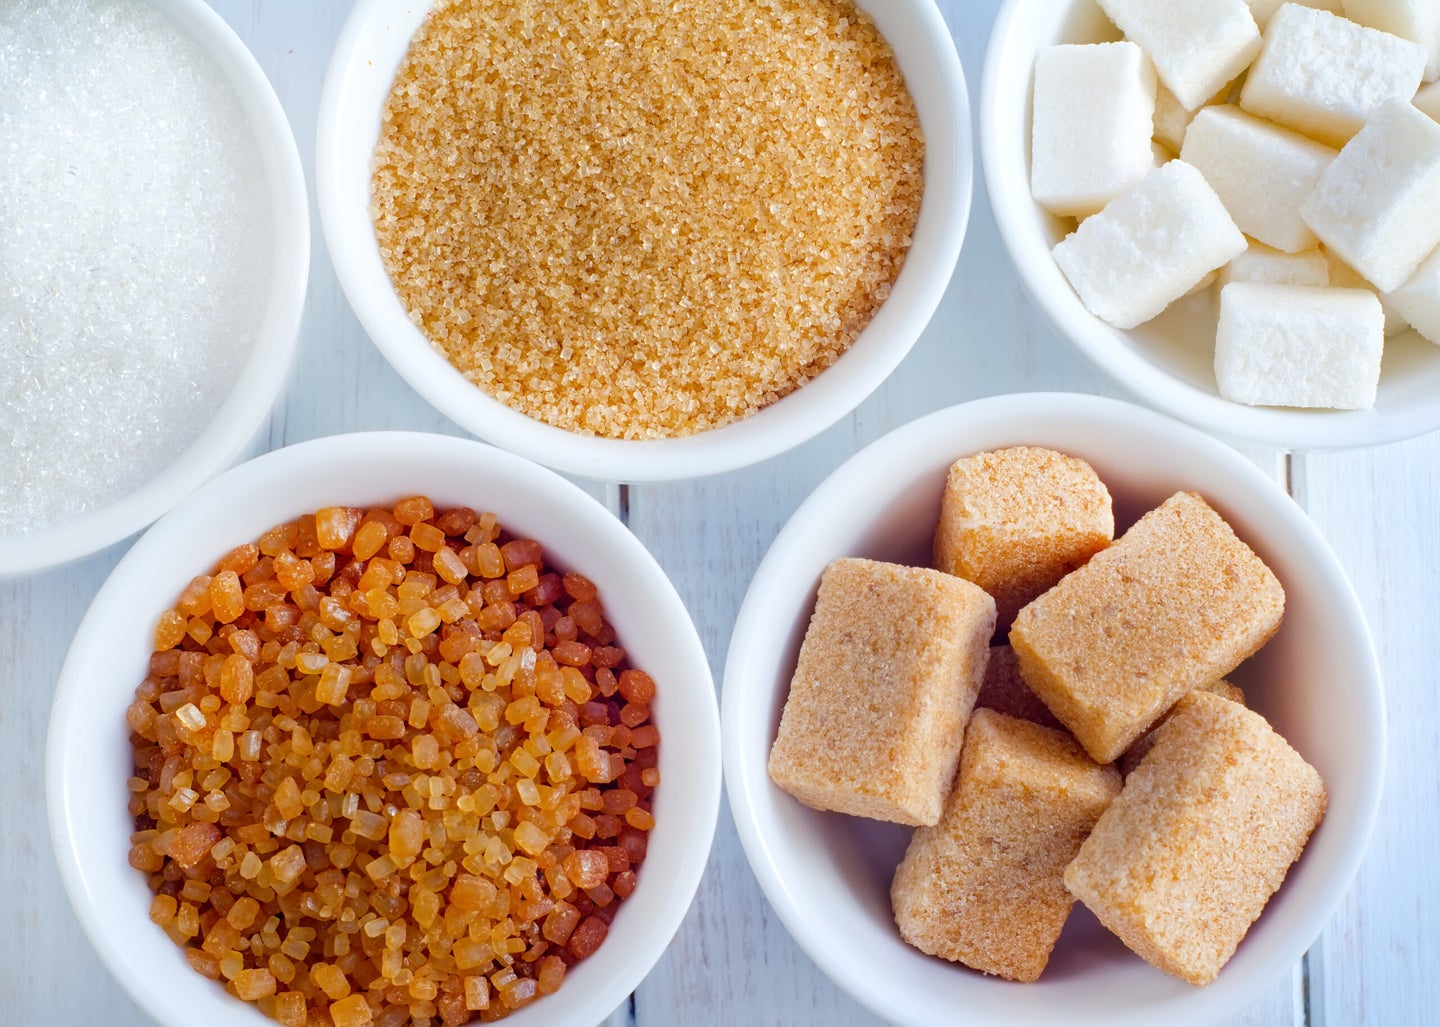 White bowls of white sugar, brown sugar, cane sugar, and unrefined sugar